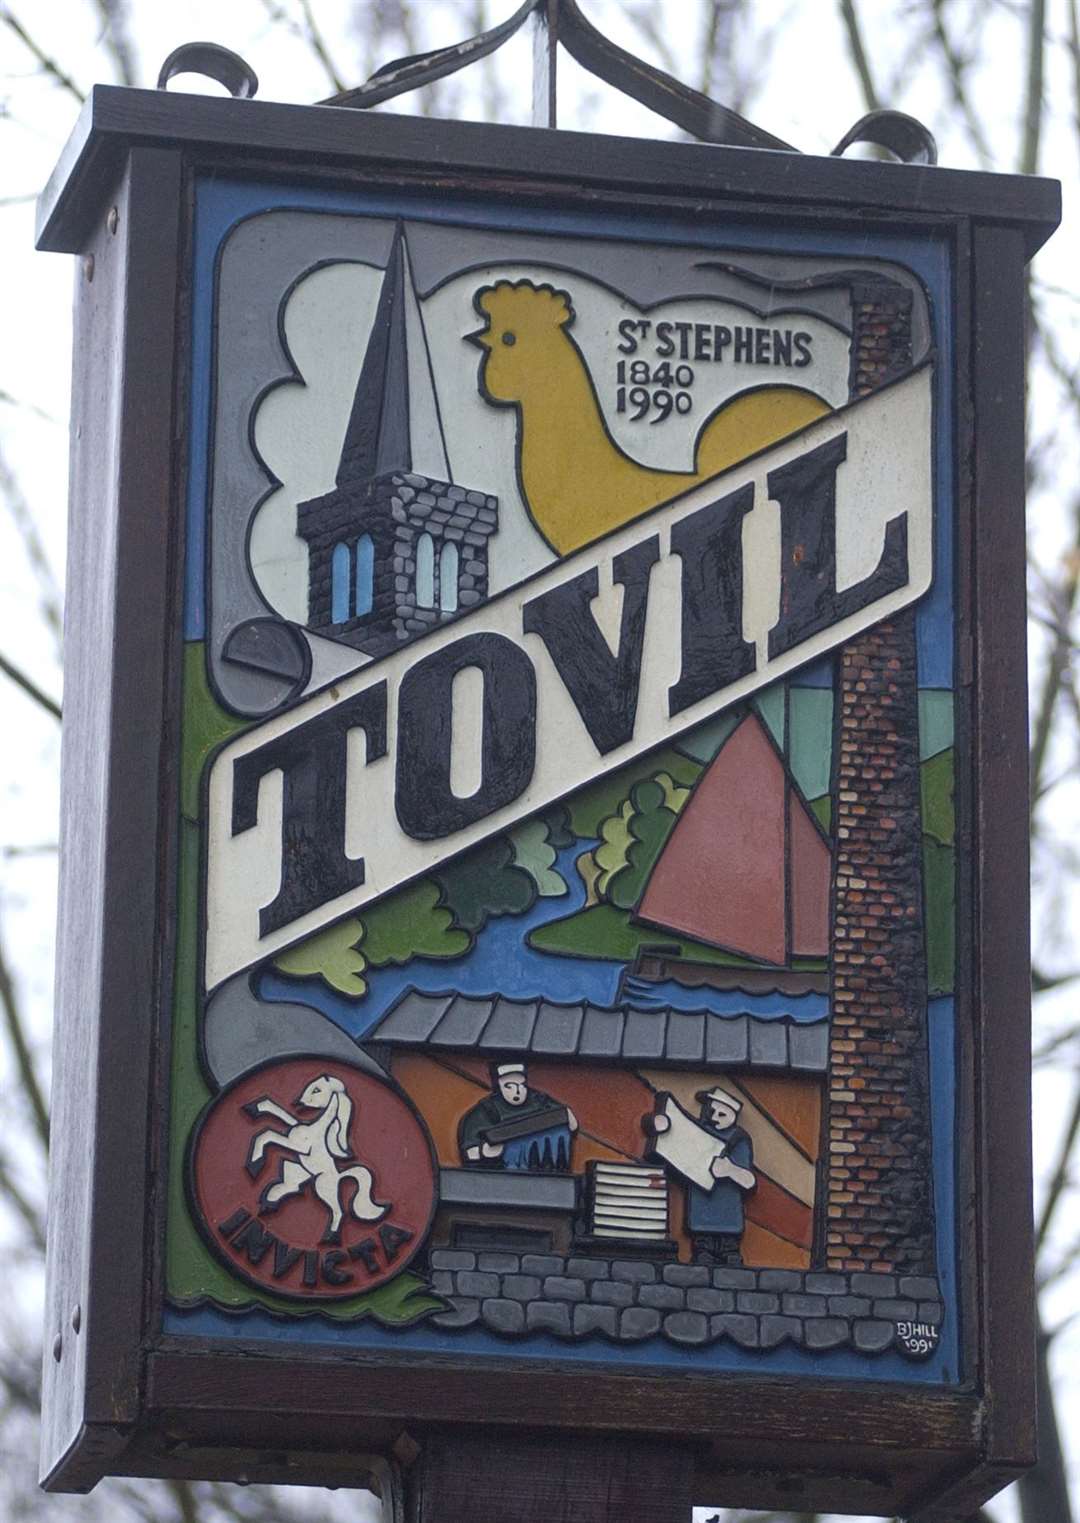 Tovil's parish sign